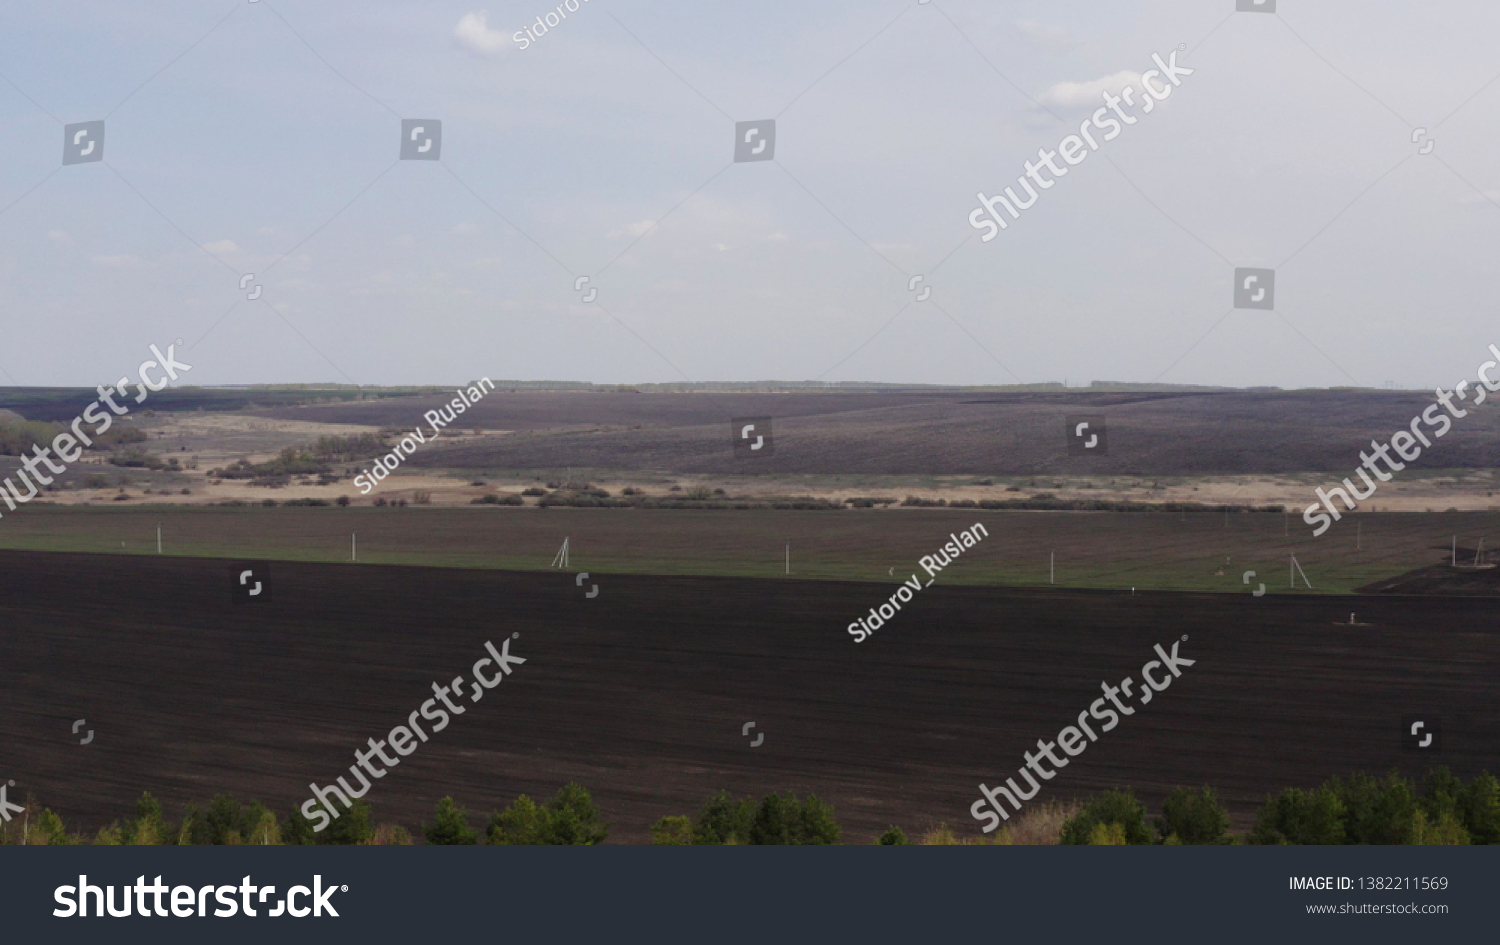 Aerial survey of arable land. Plowed field. Fertile land of arable land. Sowing. Fly over the arable land. #1382211569